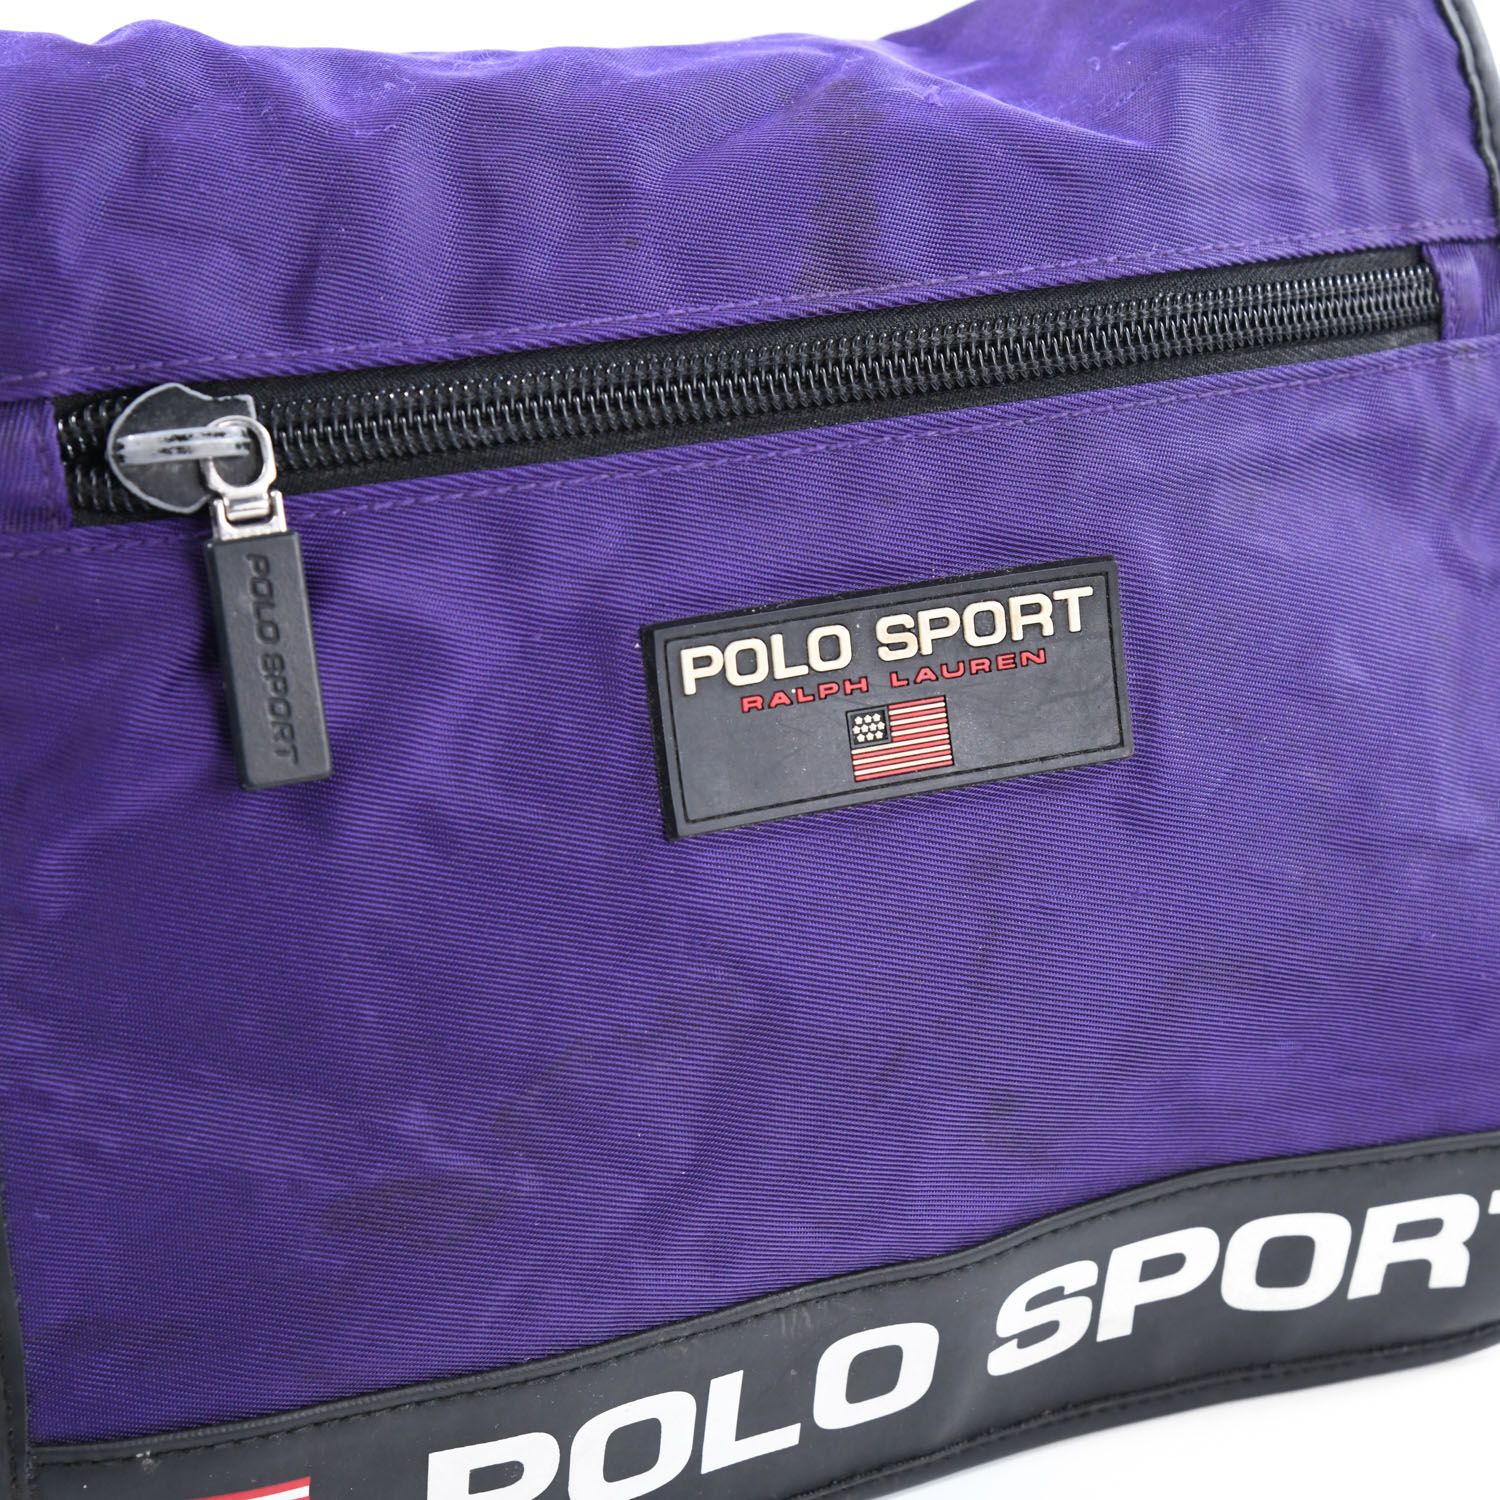 Ralph Lauren Polo Sport Shoulder Bag